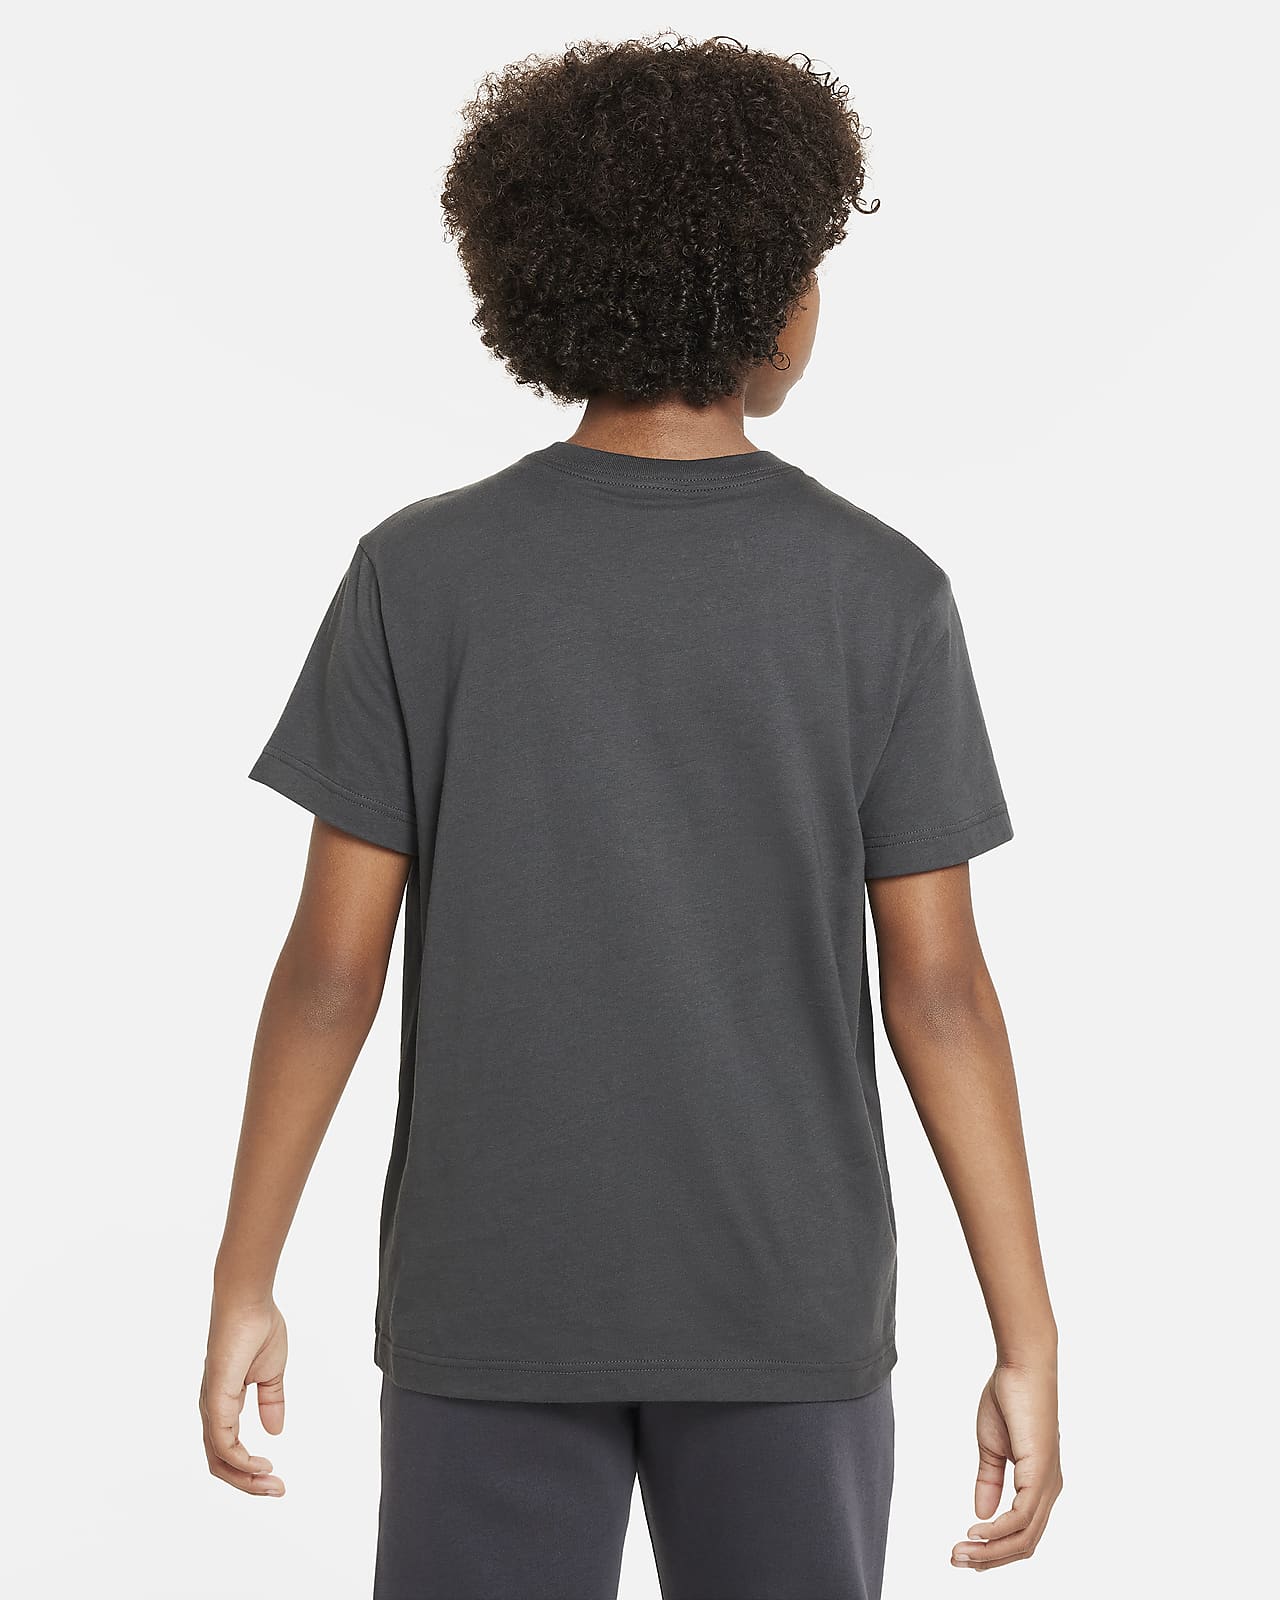 IetpShops - VETEMENTS Printed T - shirt, Leggings stampati a vita alta Nike  Sportswear Ragazza Nero